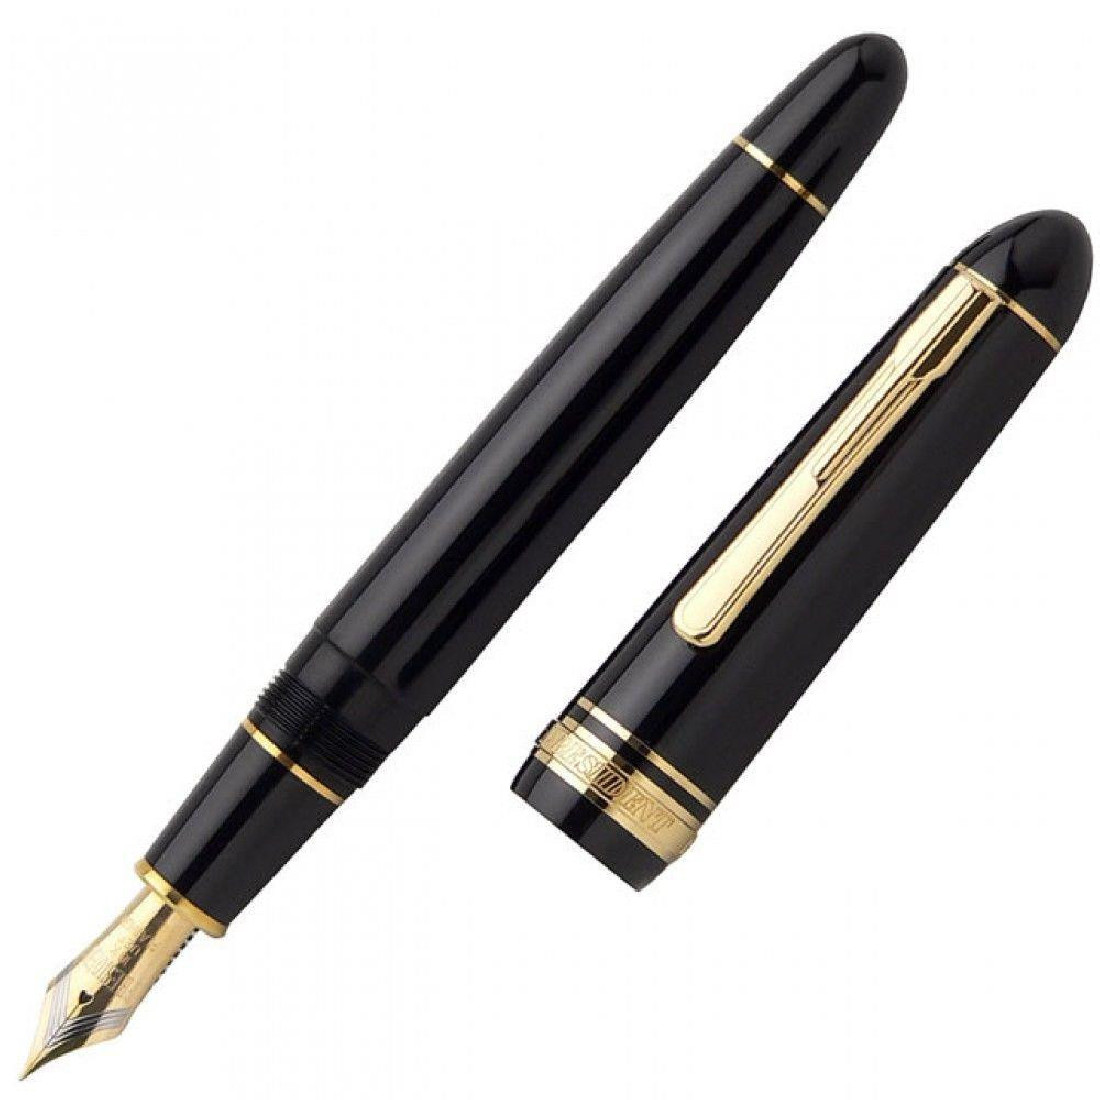 Platinum President Black Gold PTB-200000P Fountain pen